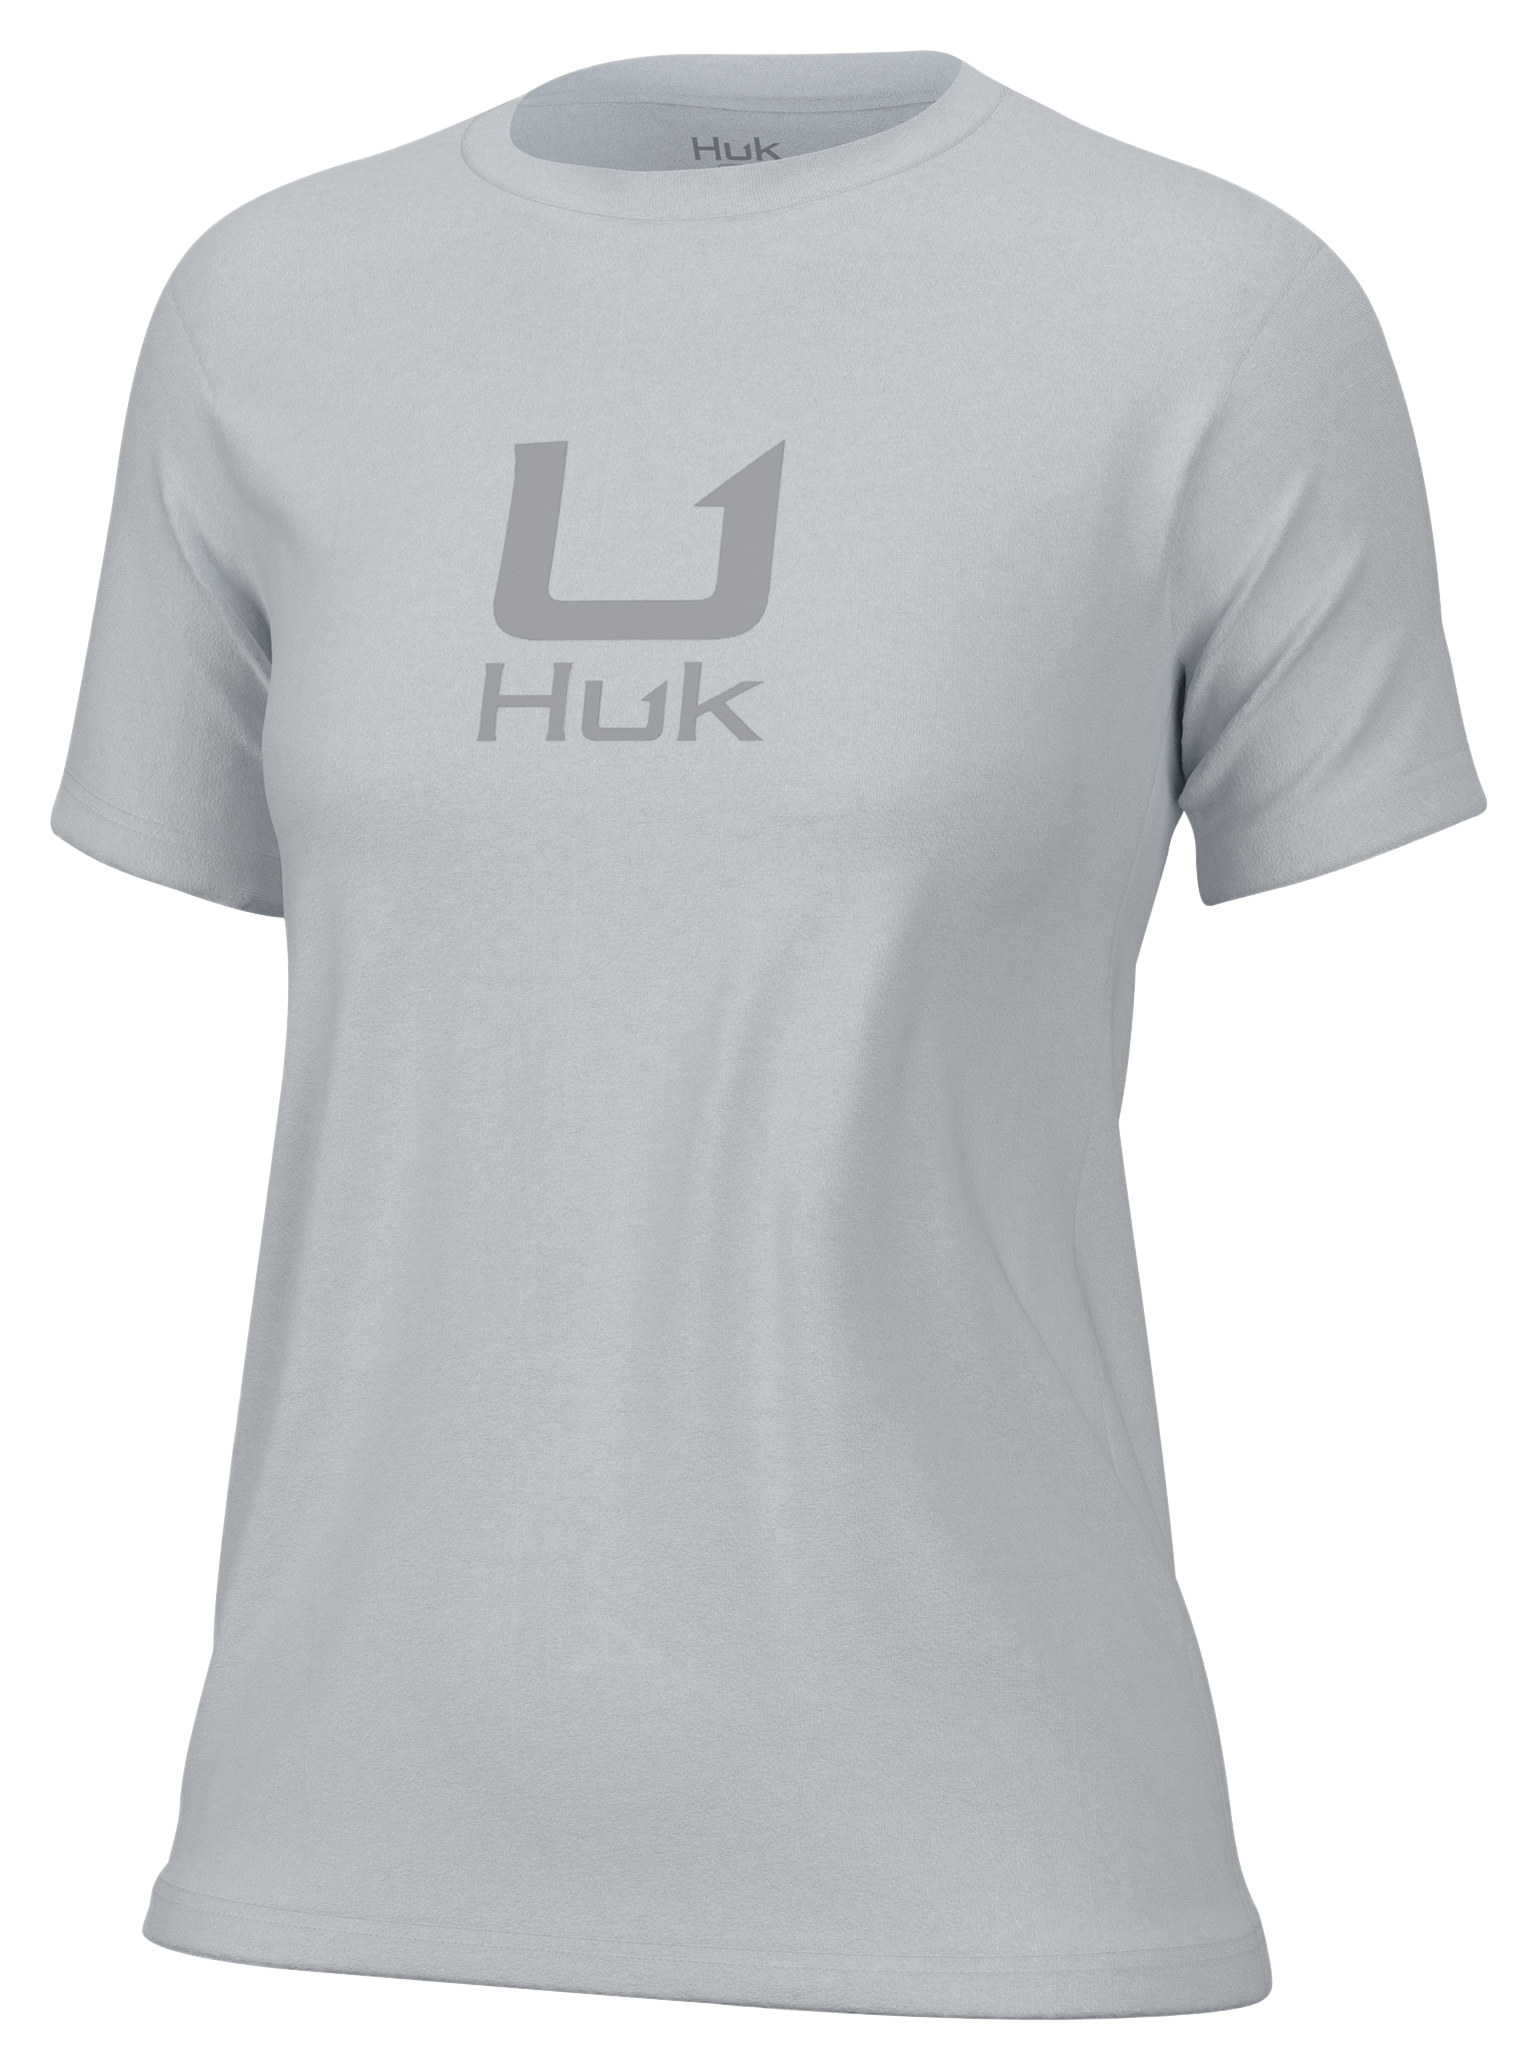 Huk Graphic Logo Short-Sleeve T-Shirt for Ladies